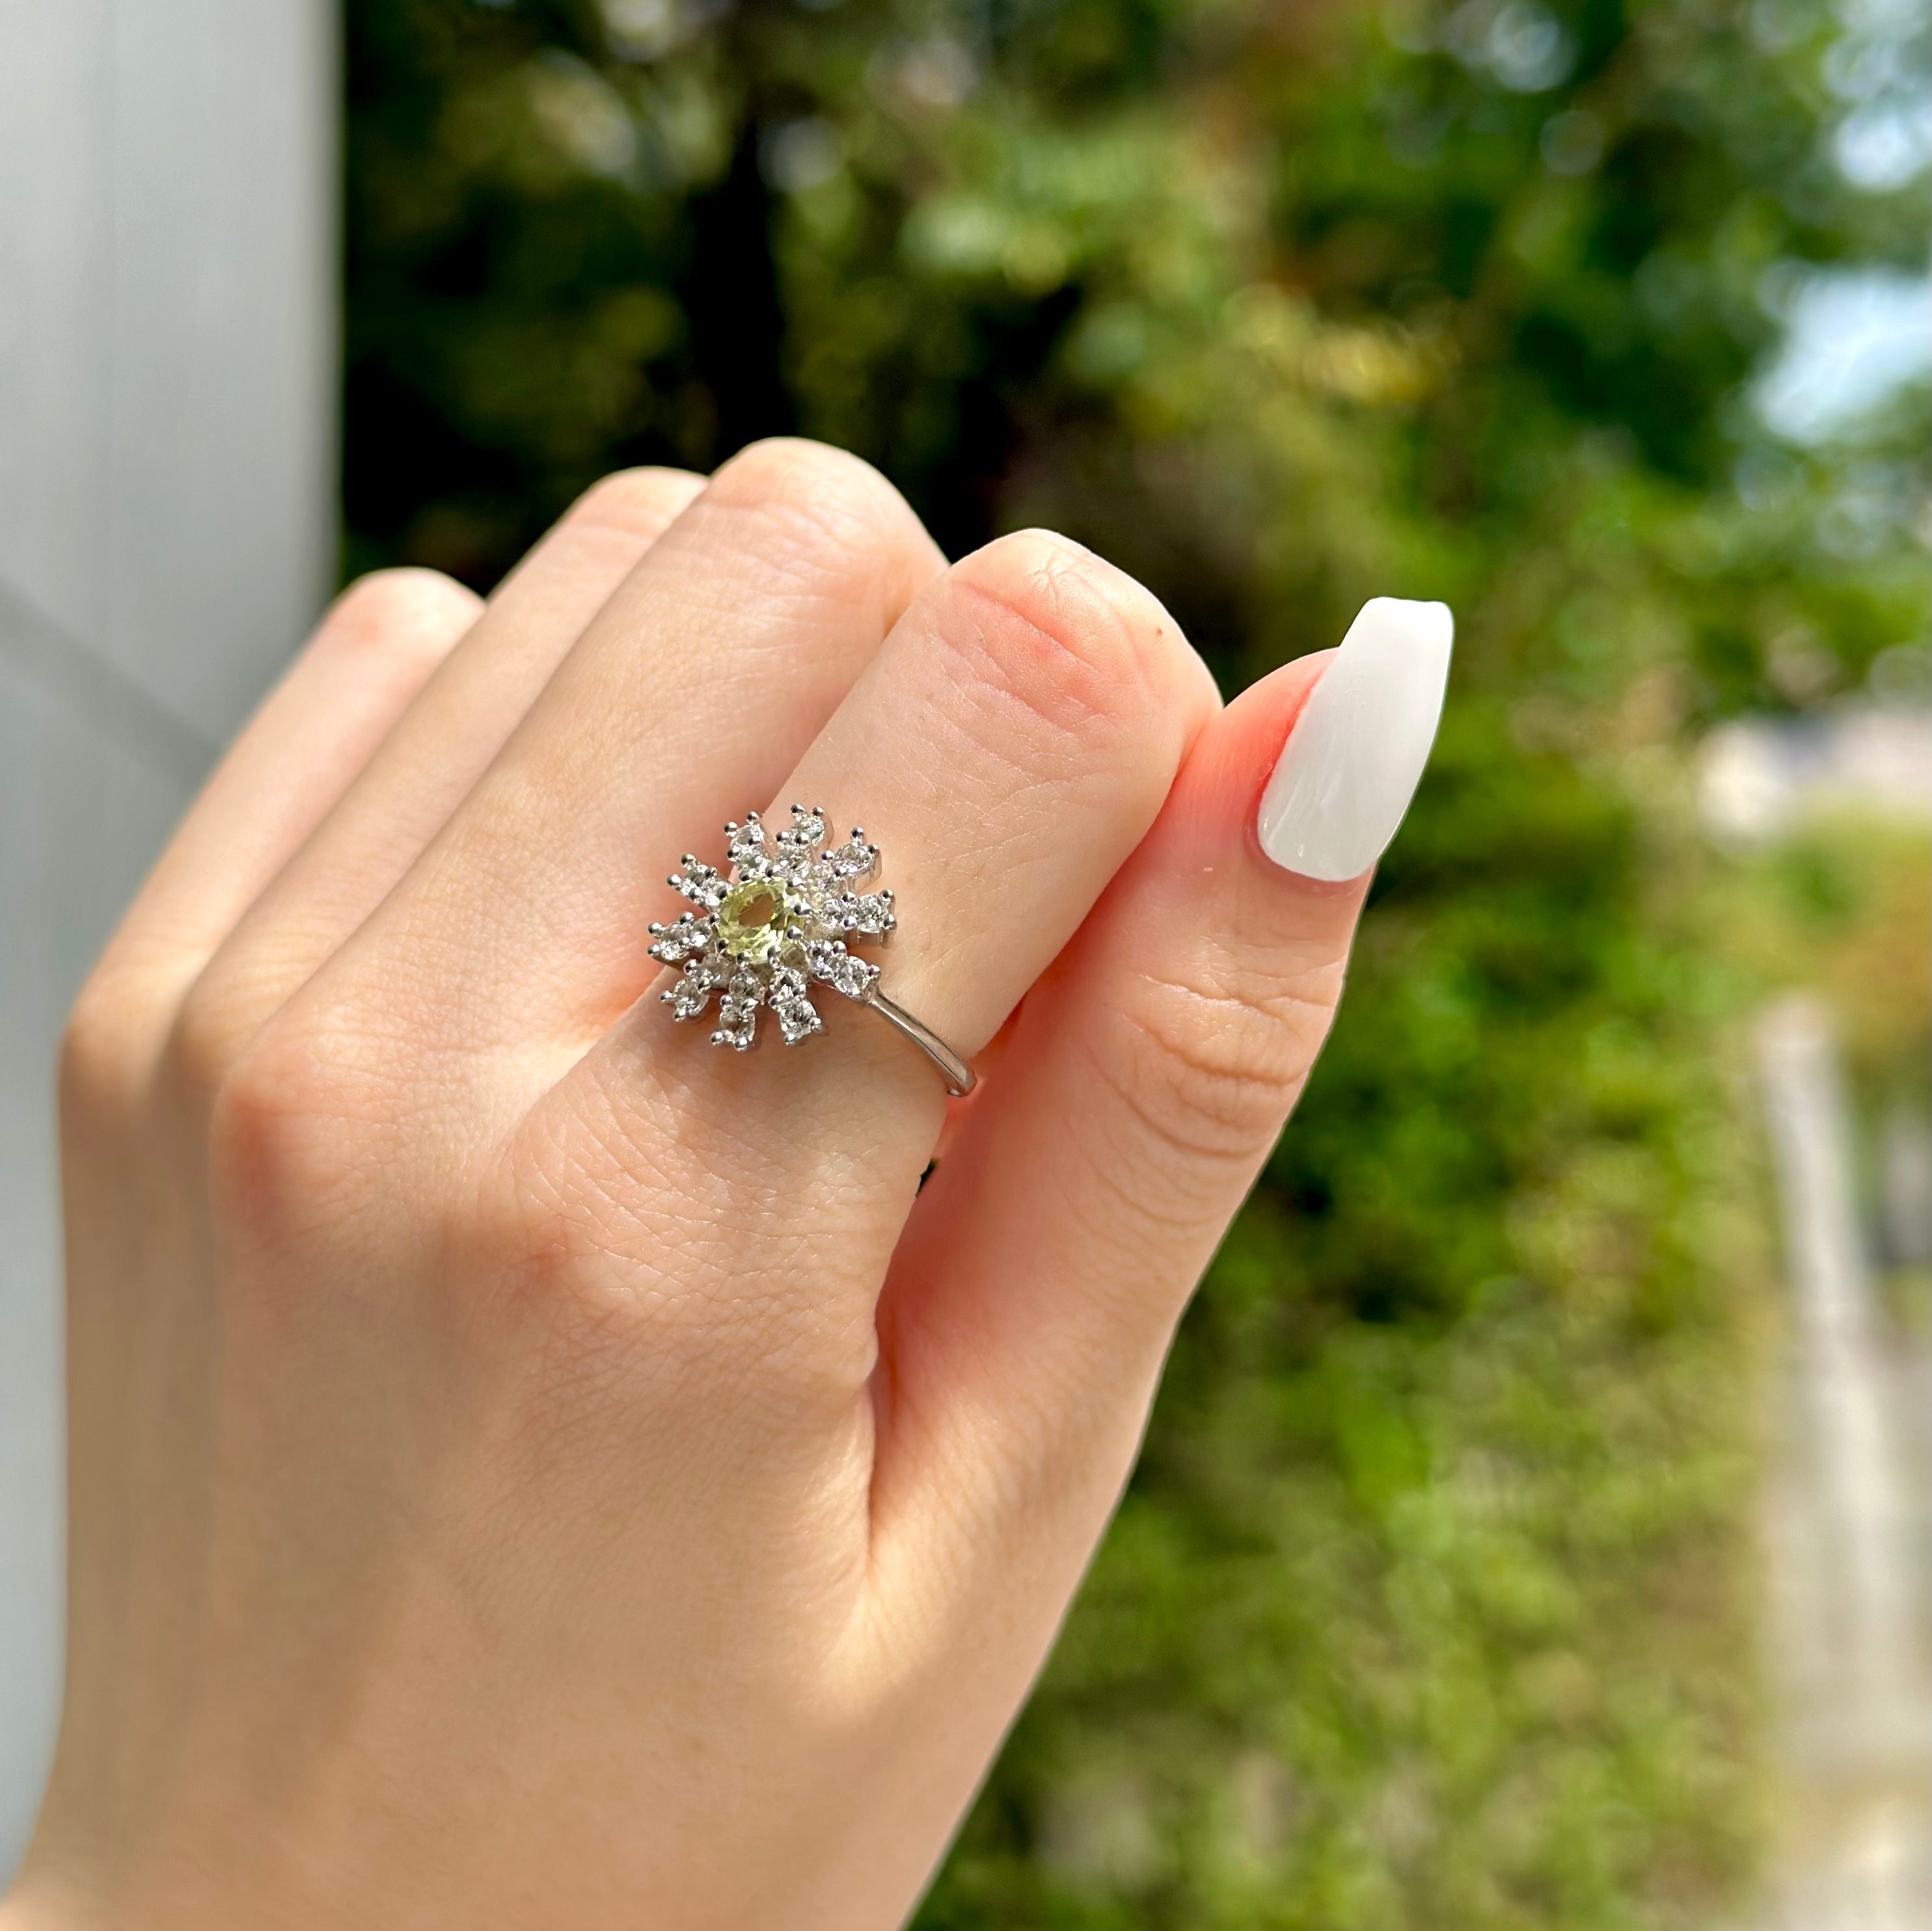 【poco】Flower ring